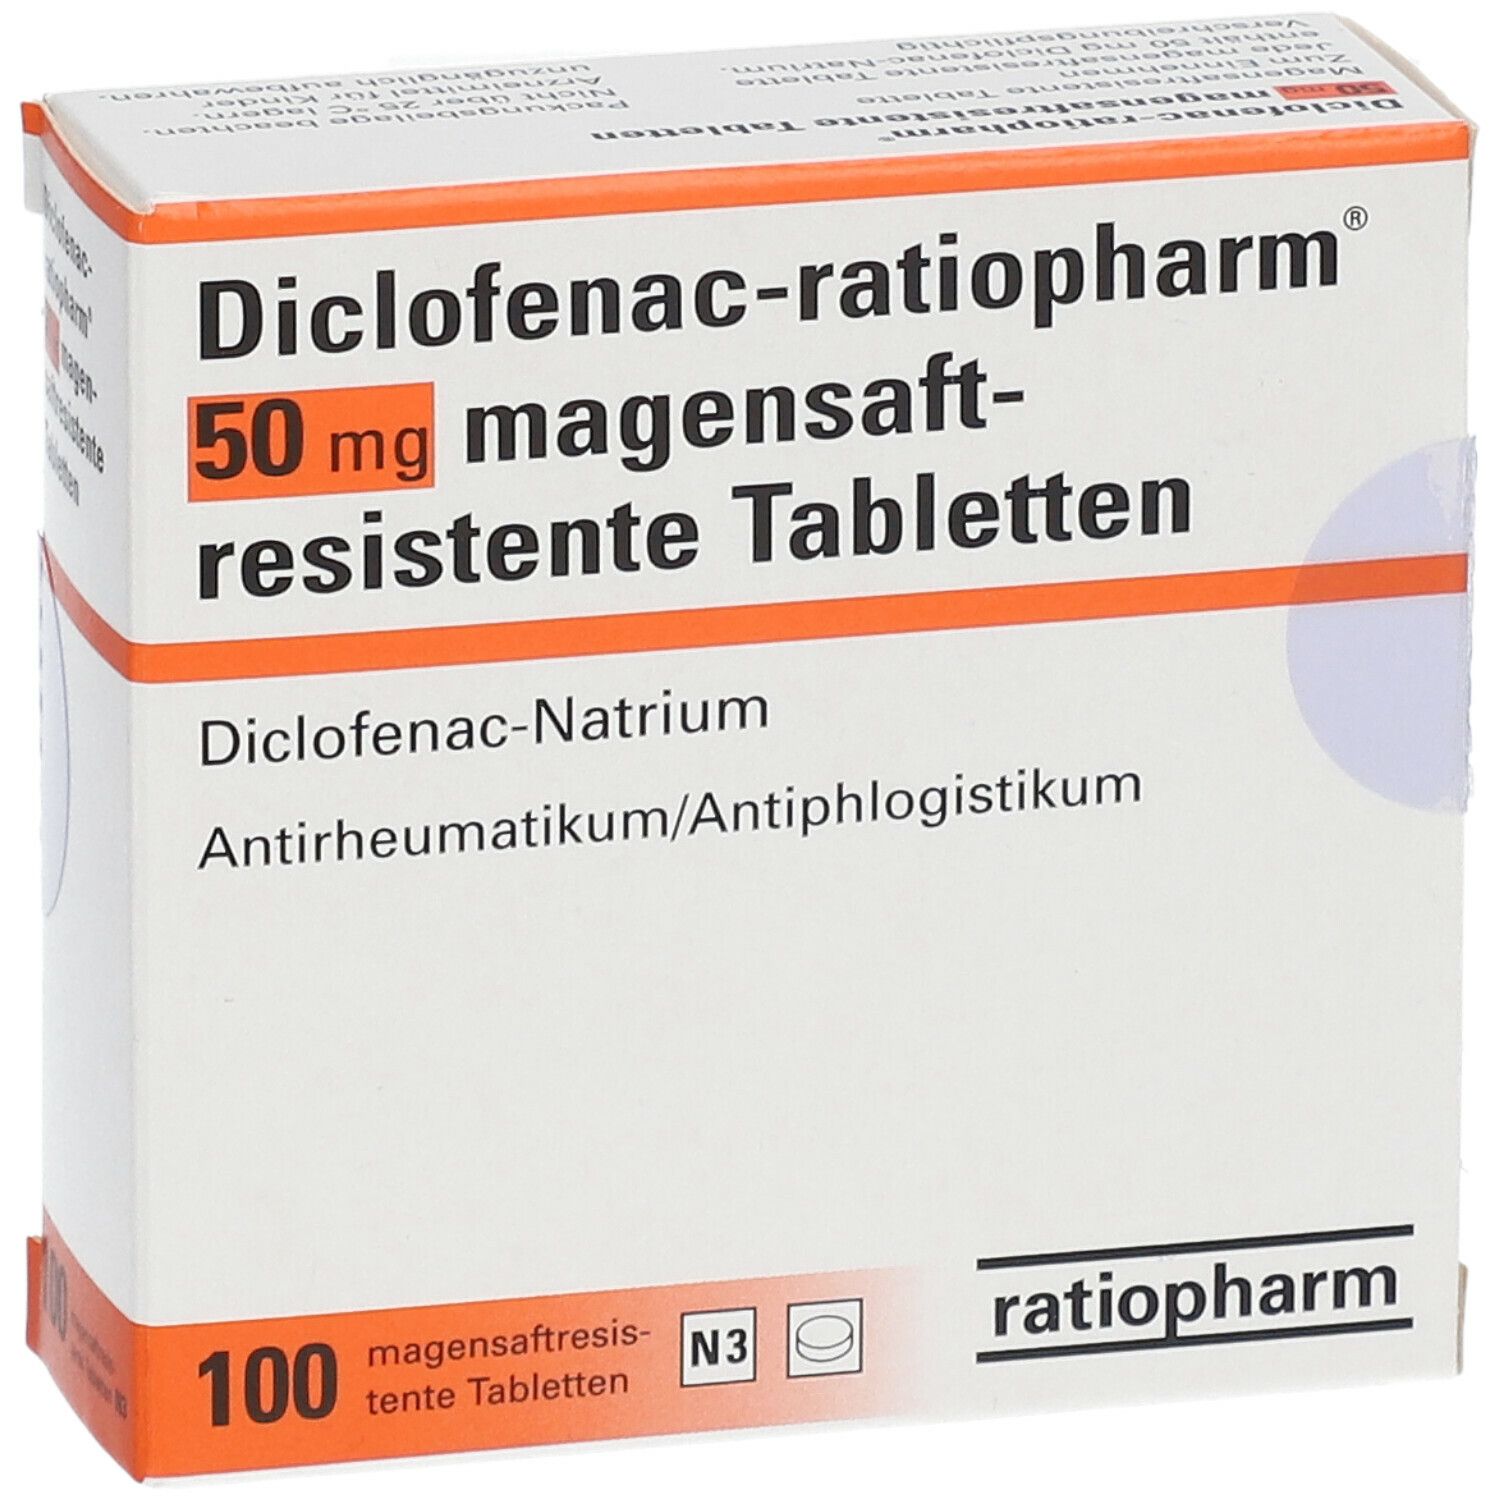 Diclofenac-ratiopharm® 50 mg